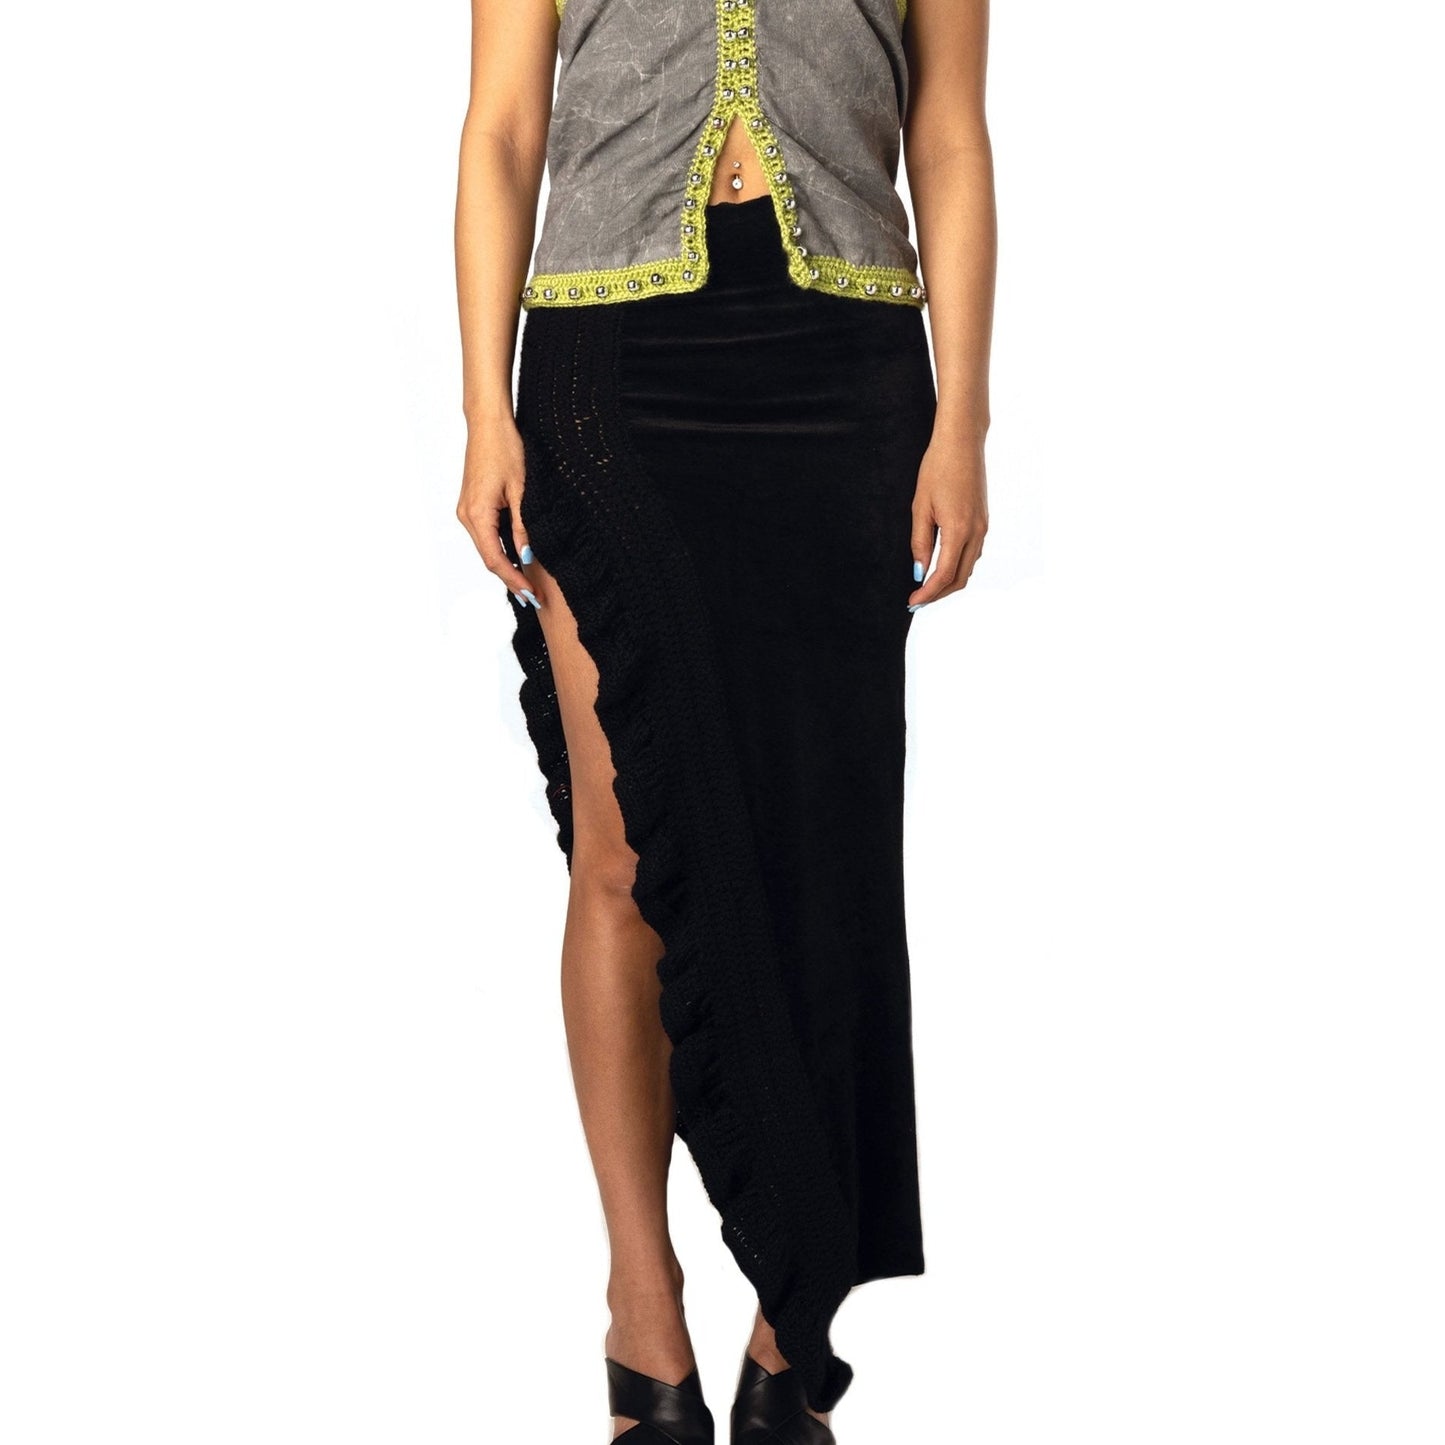 Black knit ruffle maxi skirt with thigh slit by Bailey Prado